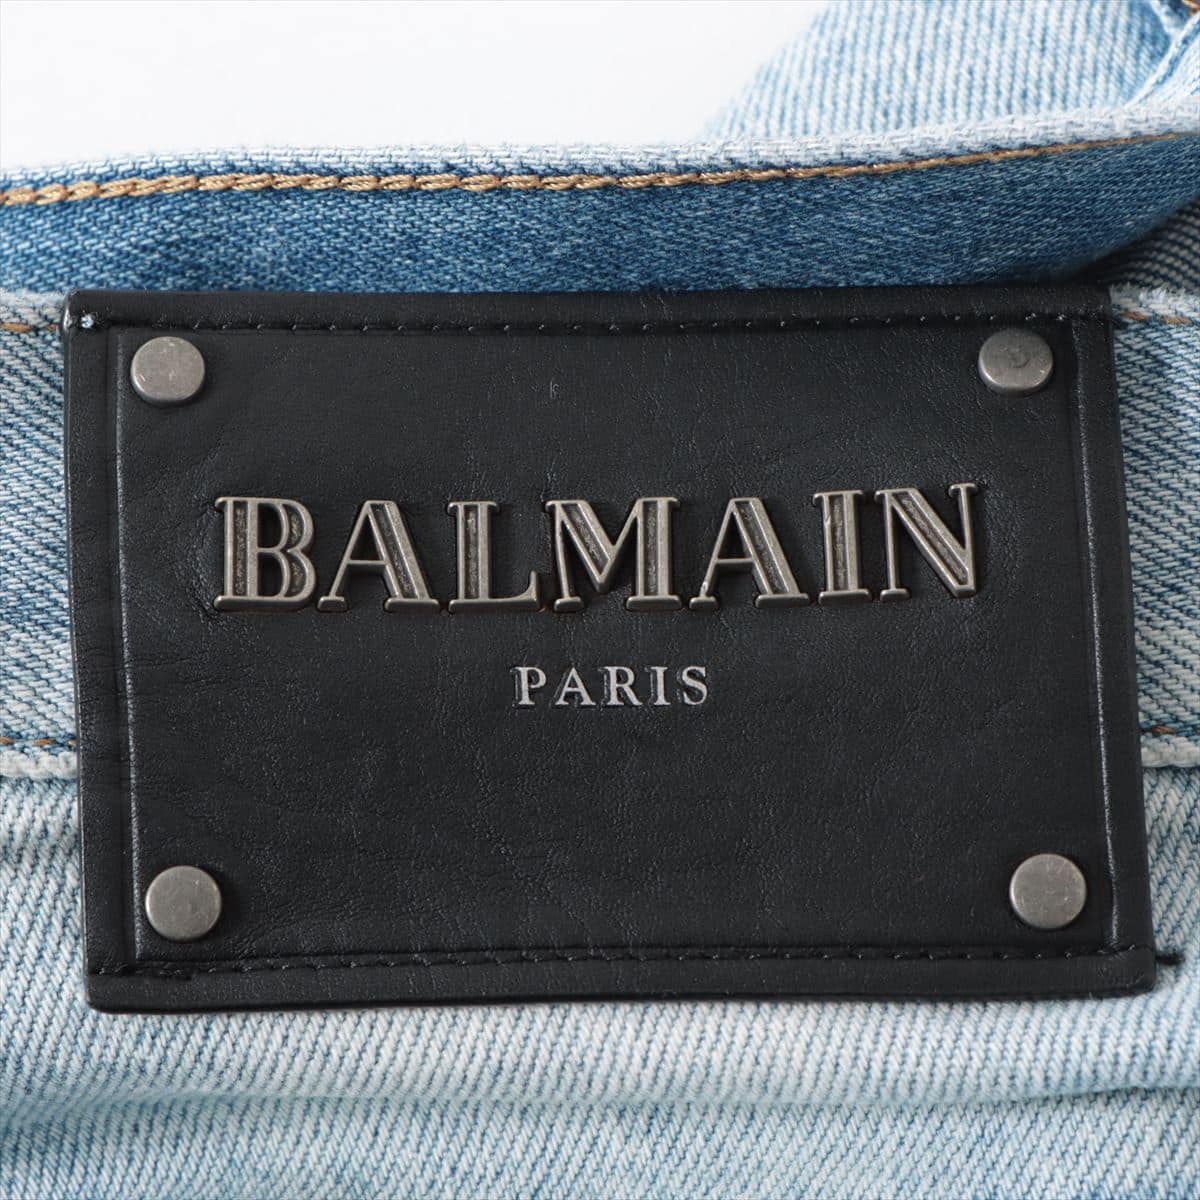 Balmain Cotton Denim pants 30 Men's Light blue  distressed biker jeans biker denim